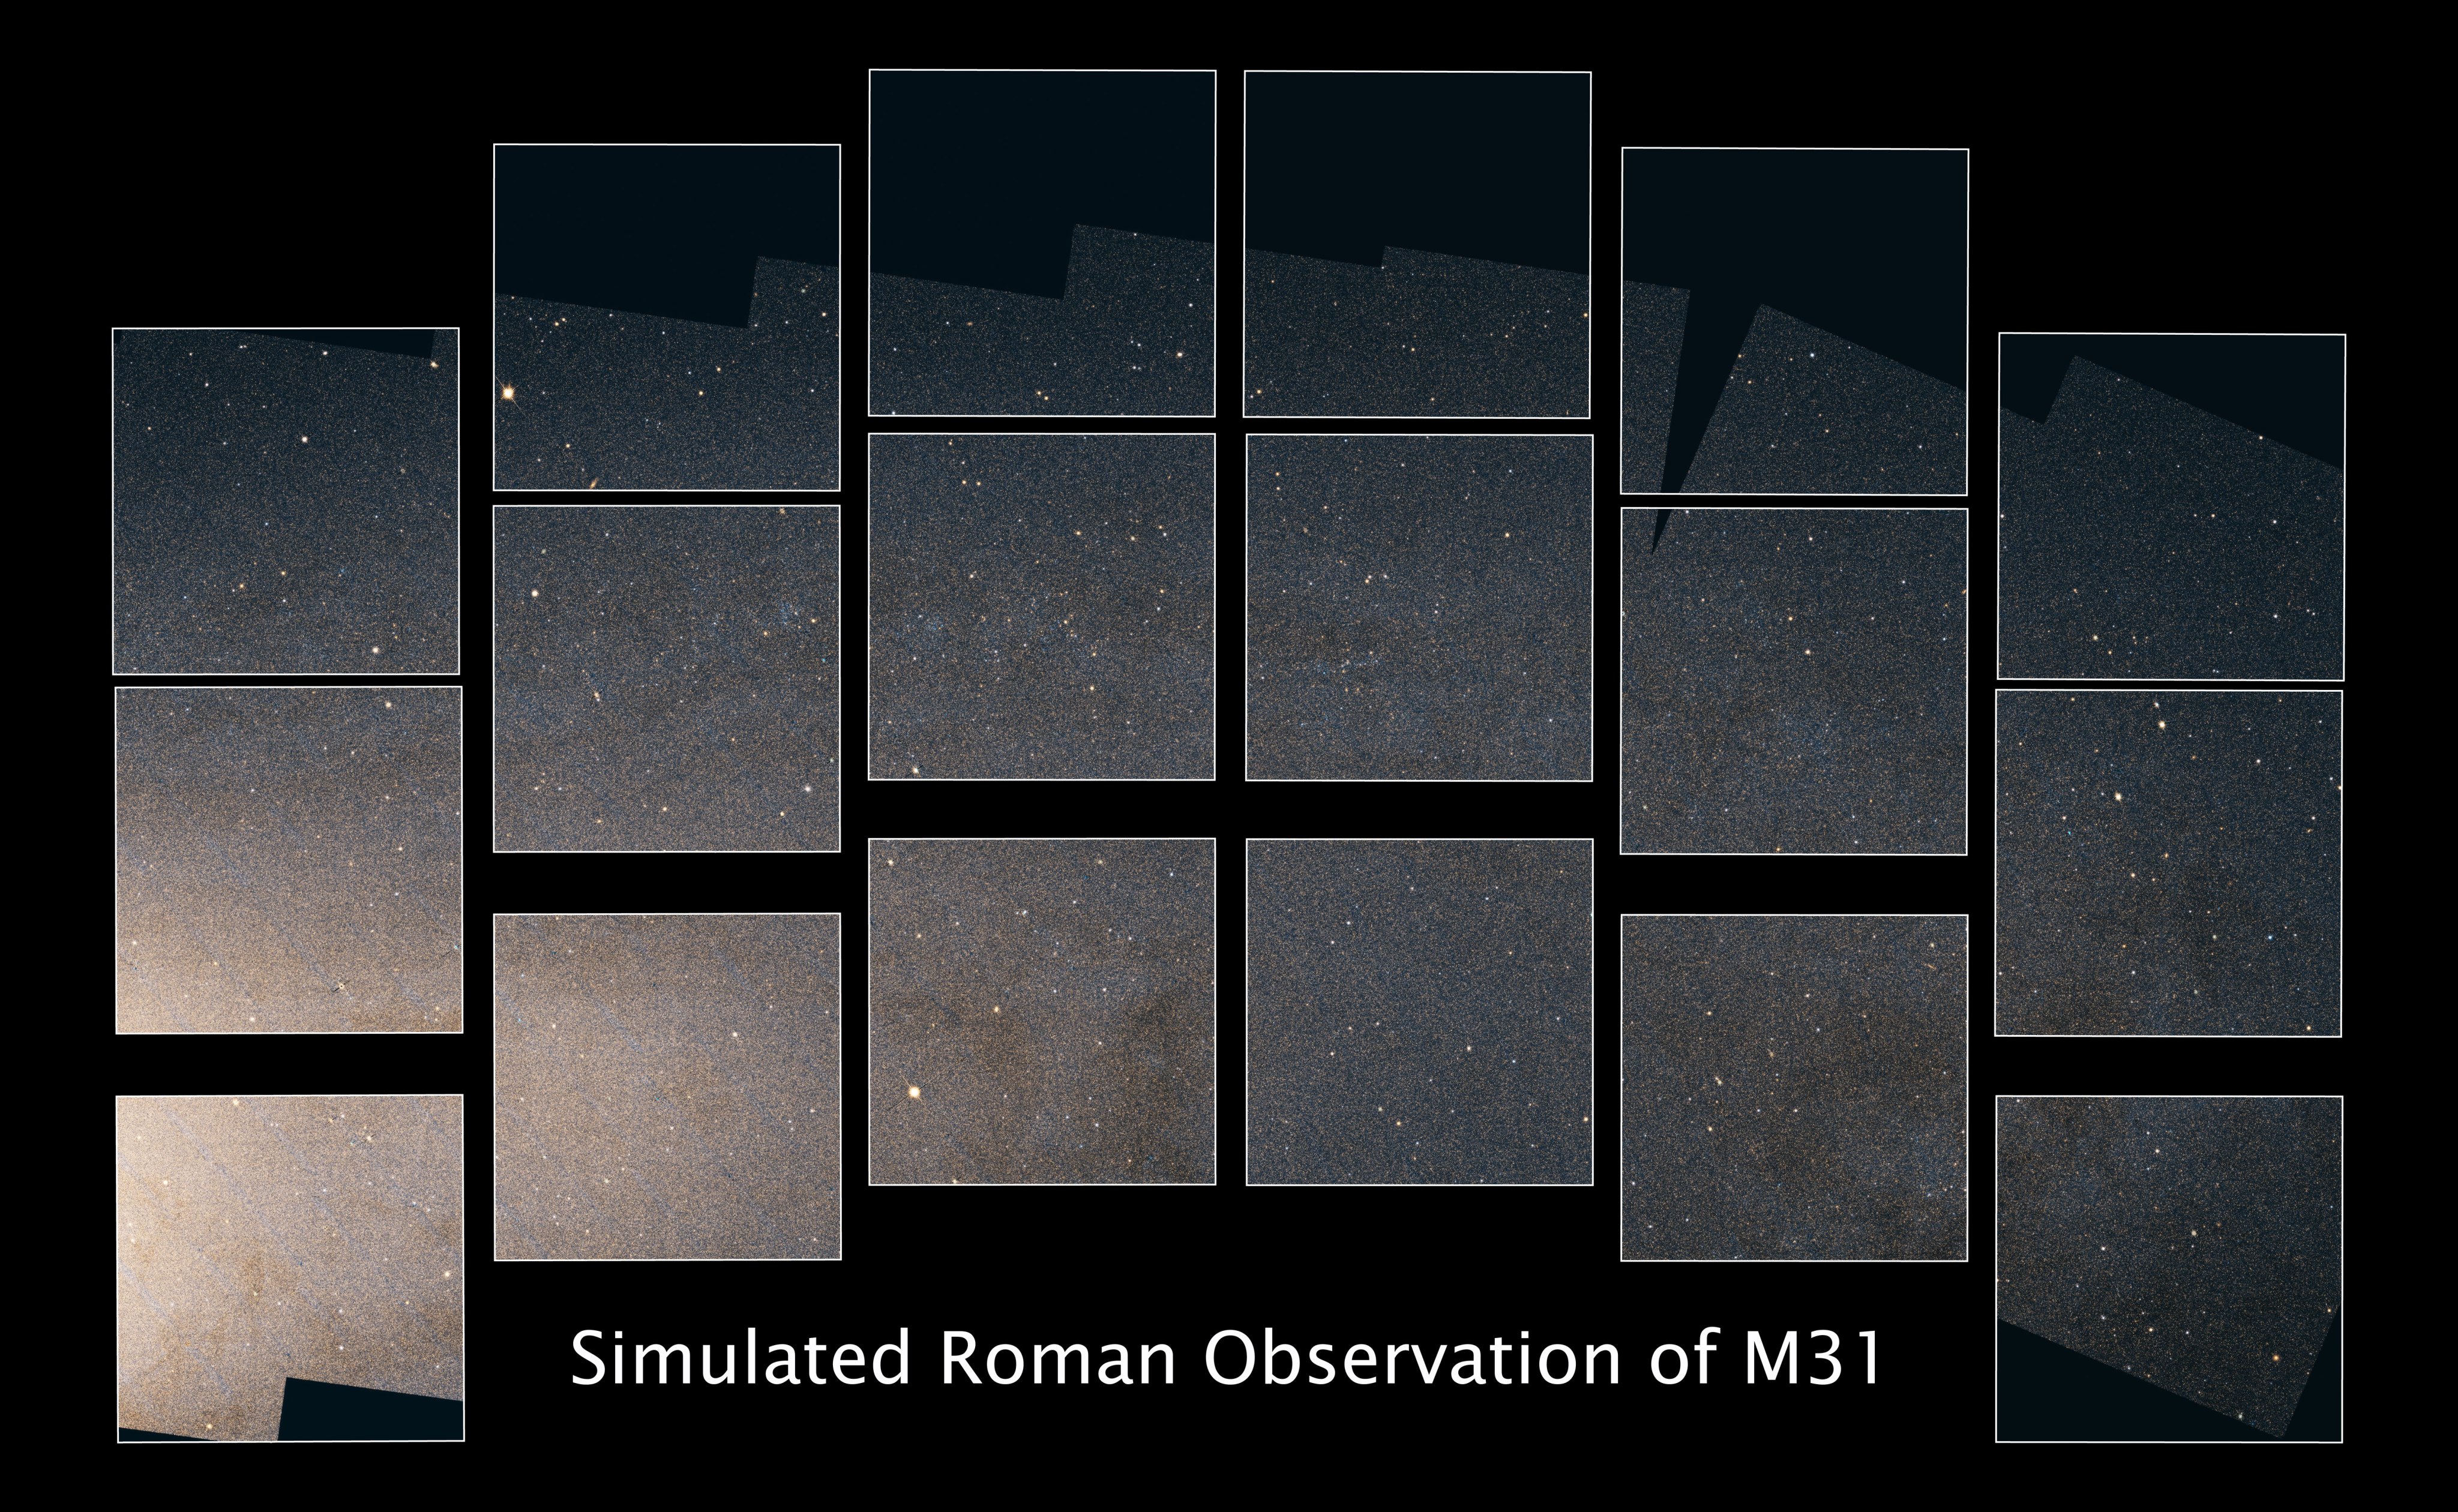 Simulated Image Demonstrates Roman's Future Power